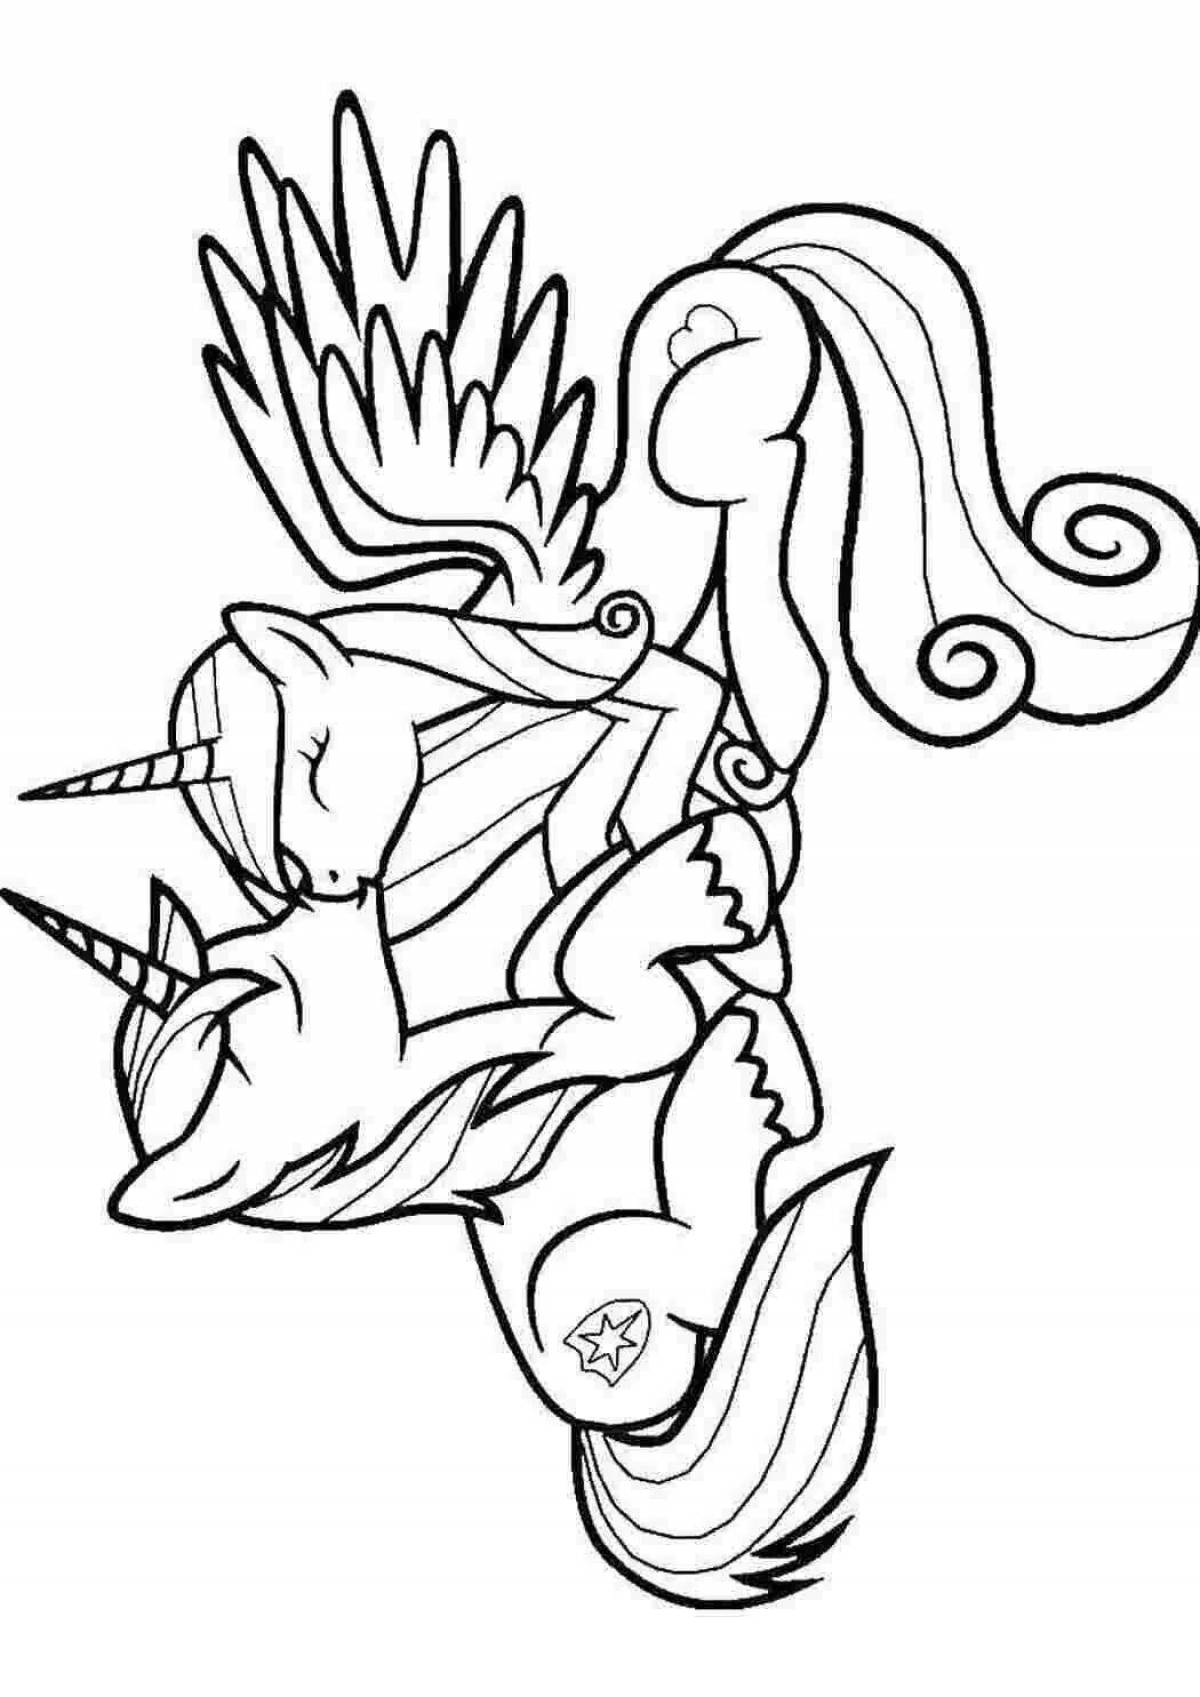 Brilliant coloring pony mermaid malital